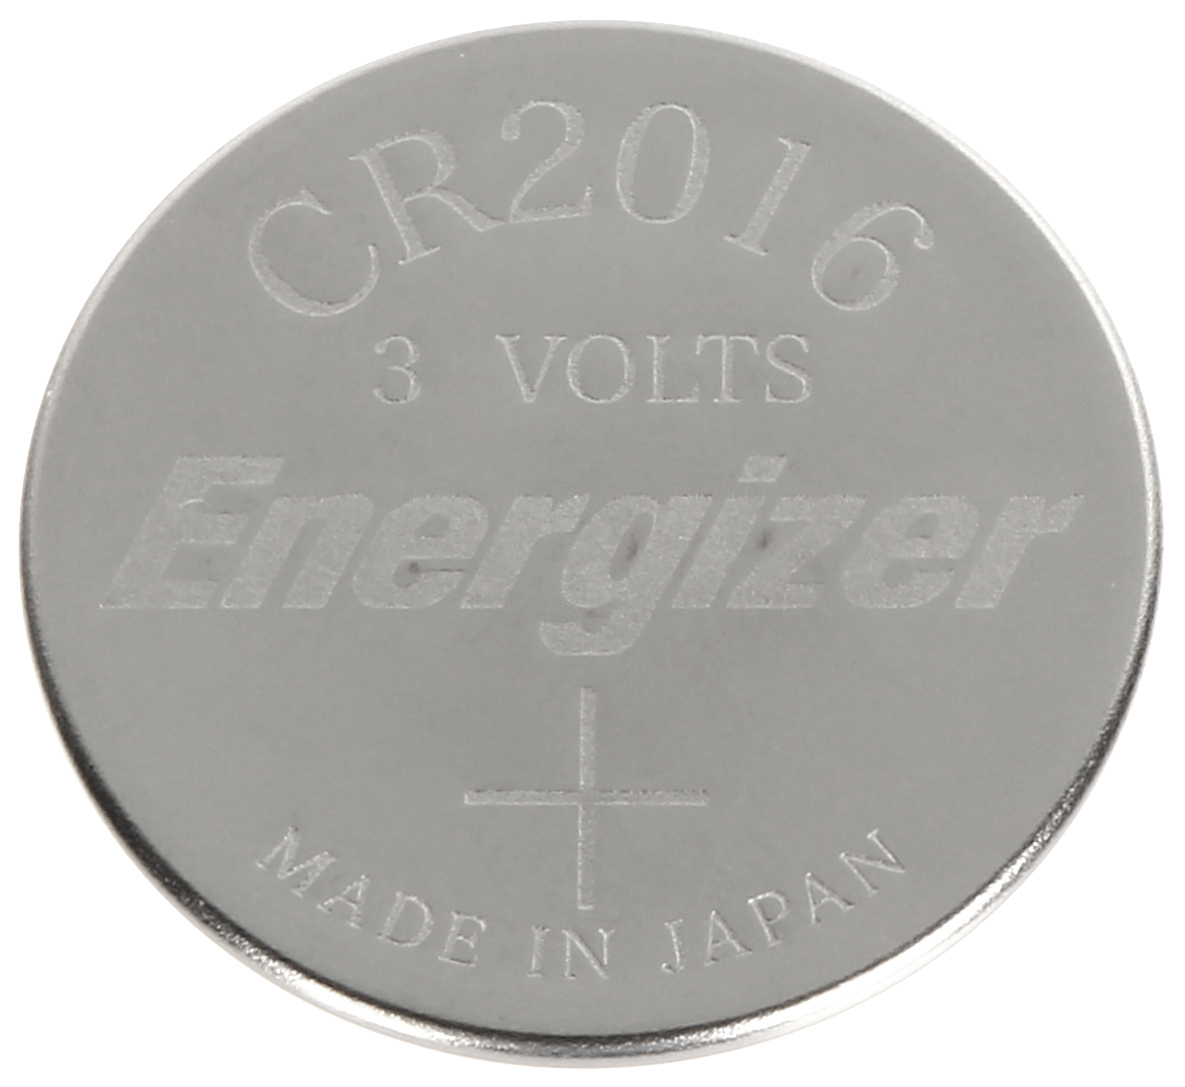 LITHIUM BATTERY BAT-CR2016-LITHIUM*P2 ENERGIZER - Coin Batteries - Delta